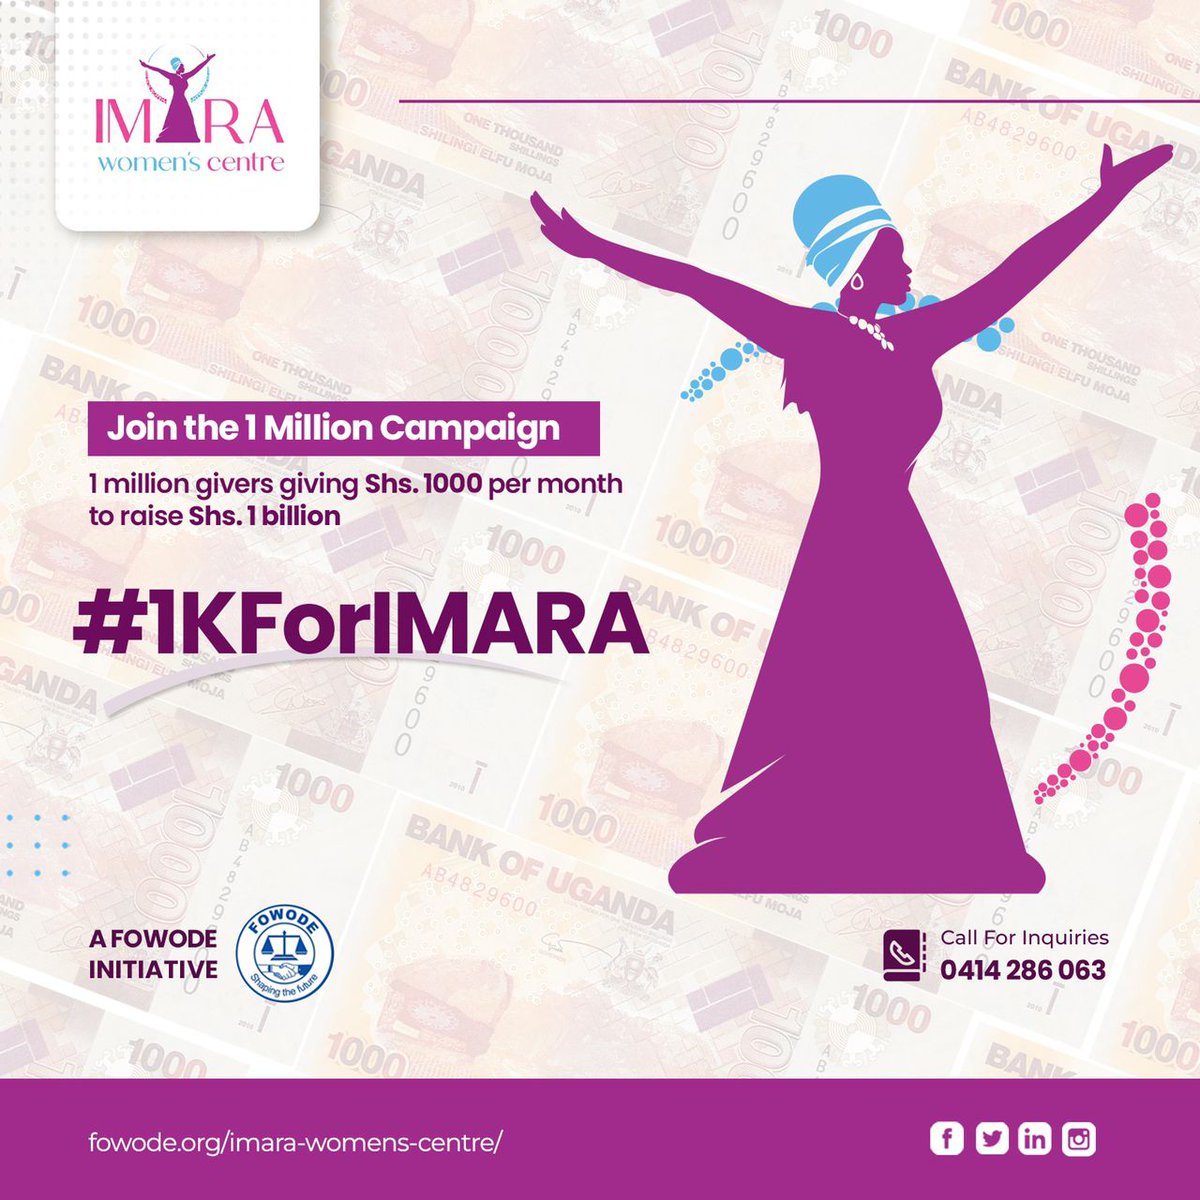 The new center will help us strengthen women's leadership in institutions, decision making and change processes
#ImagineImara #ImaraFriday #1KForIMARA